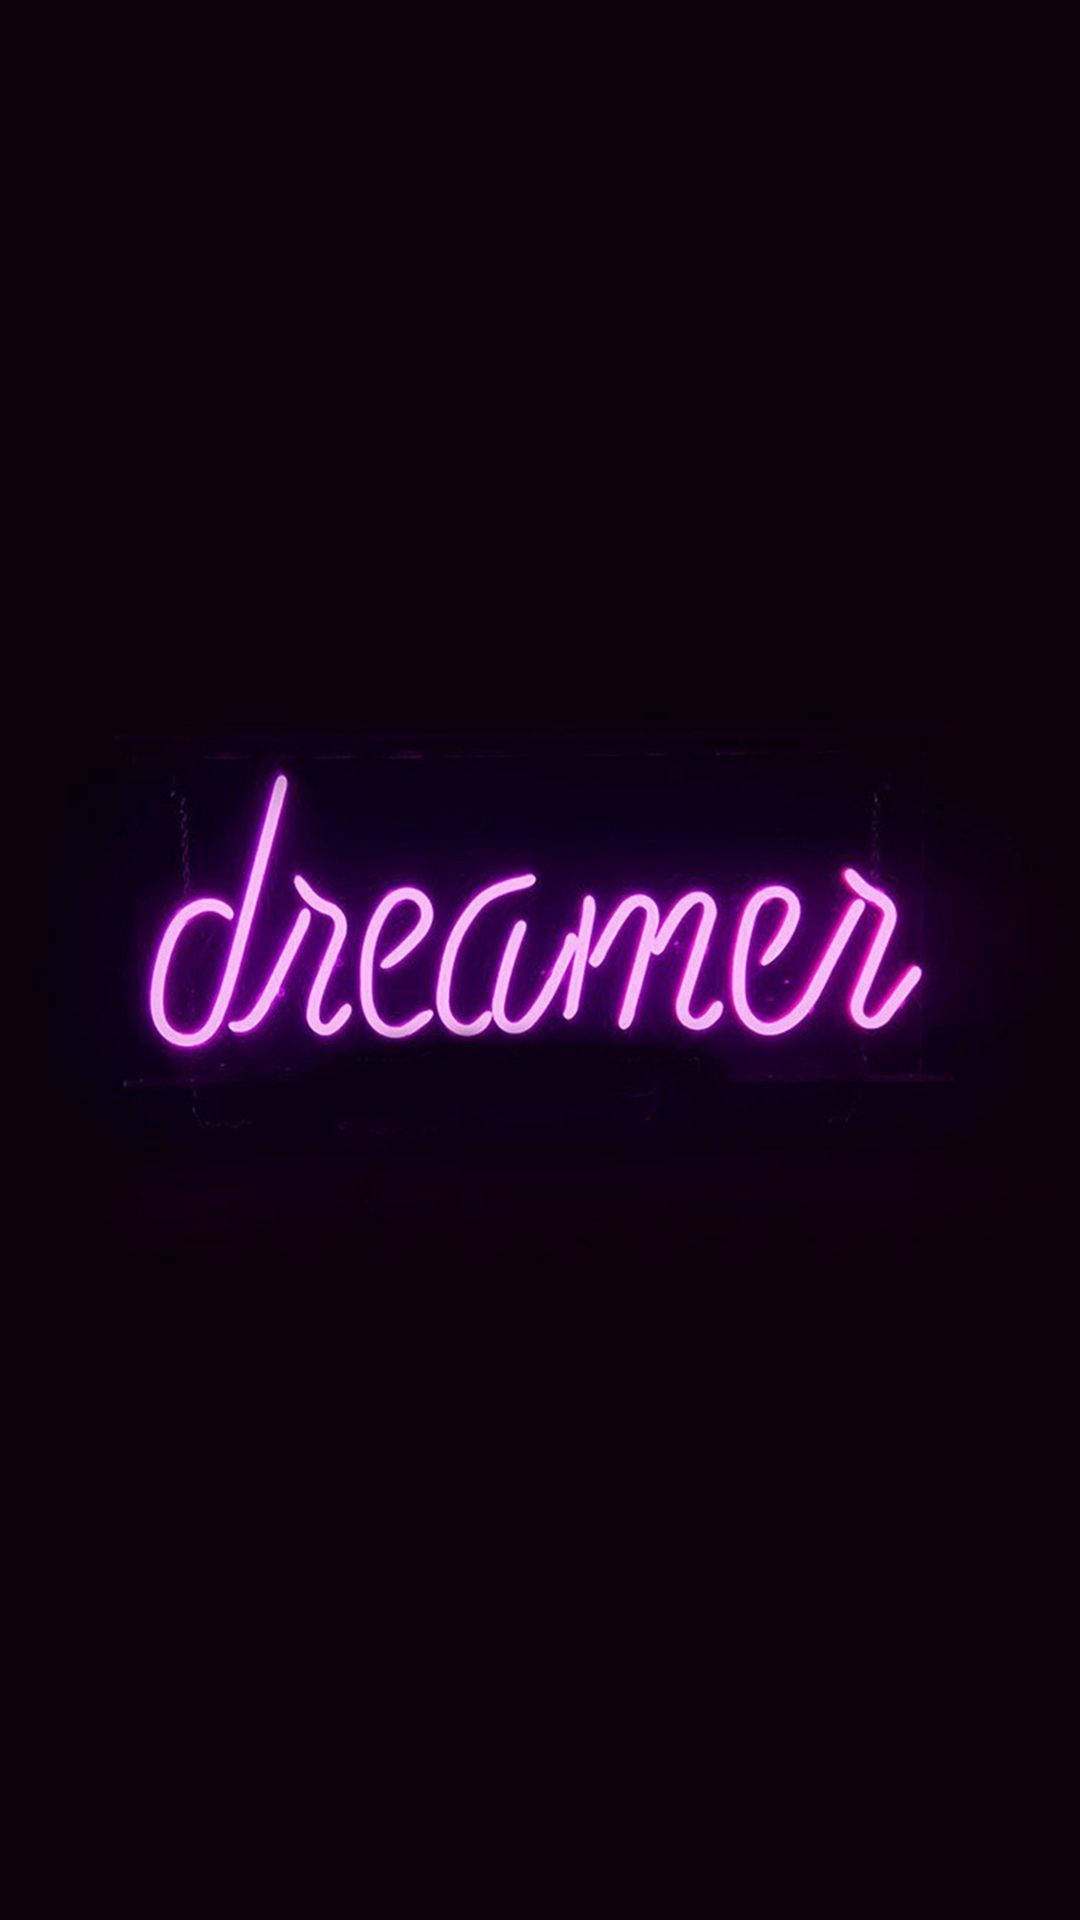 Dreamer Black And Purple Aesthetic Wallpaper